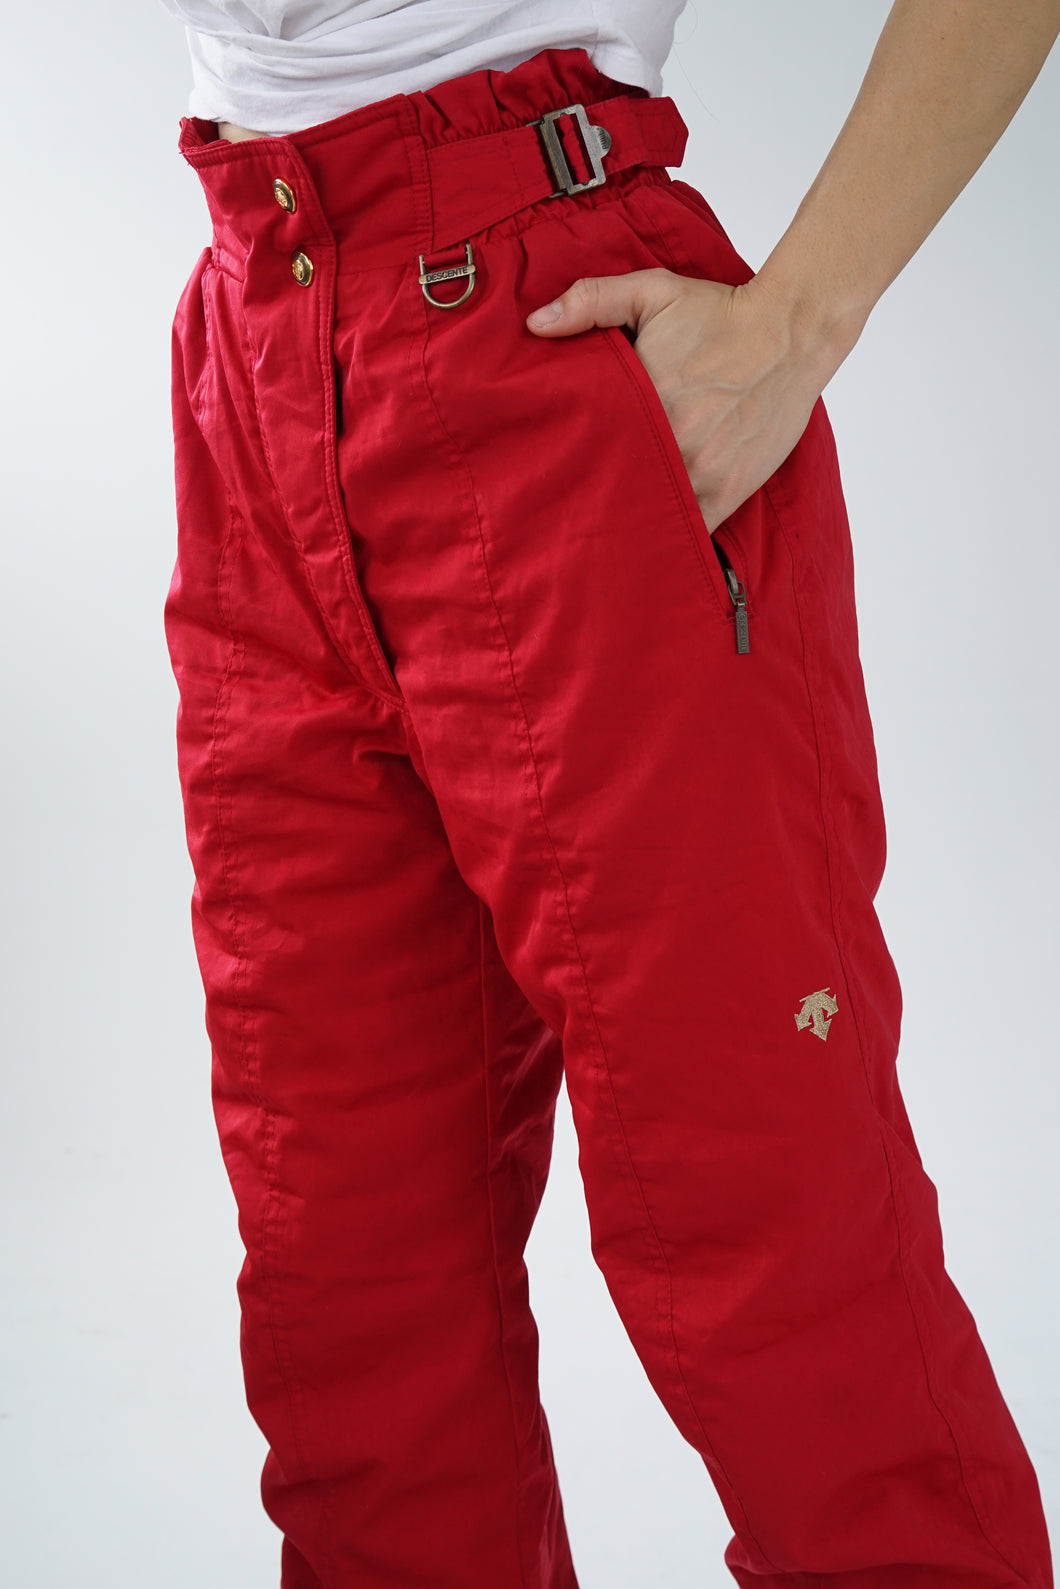 Vintage snow pants Descente red suede for women size 12 (M)